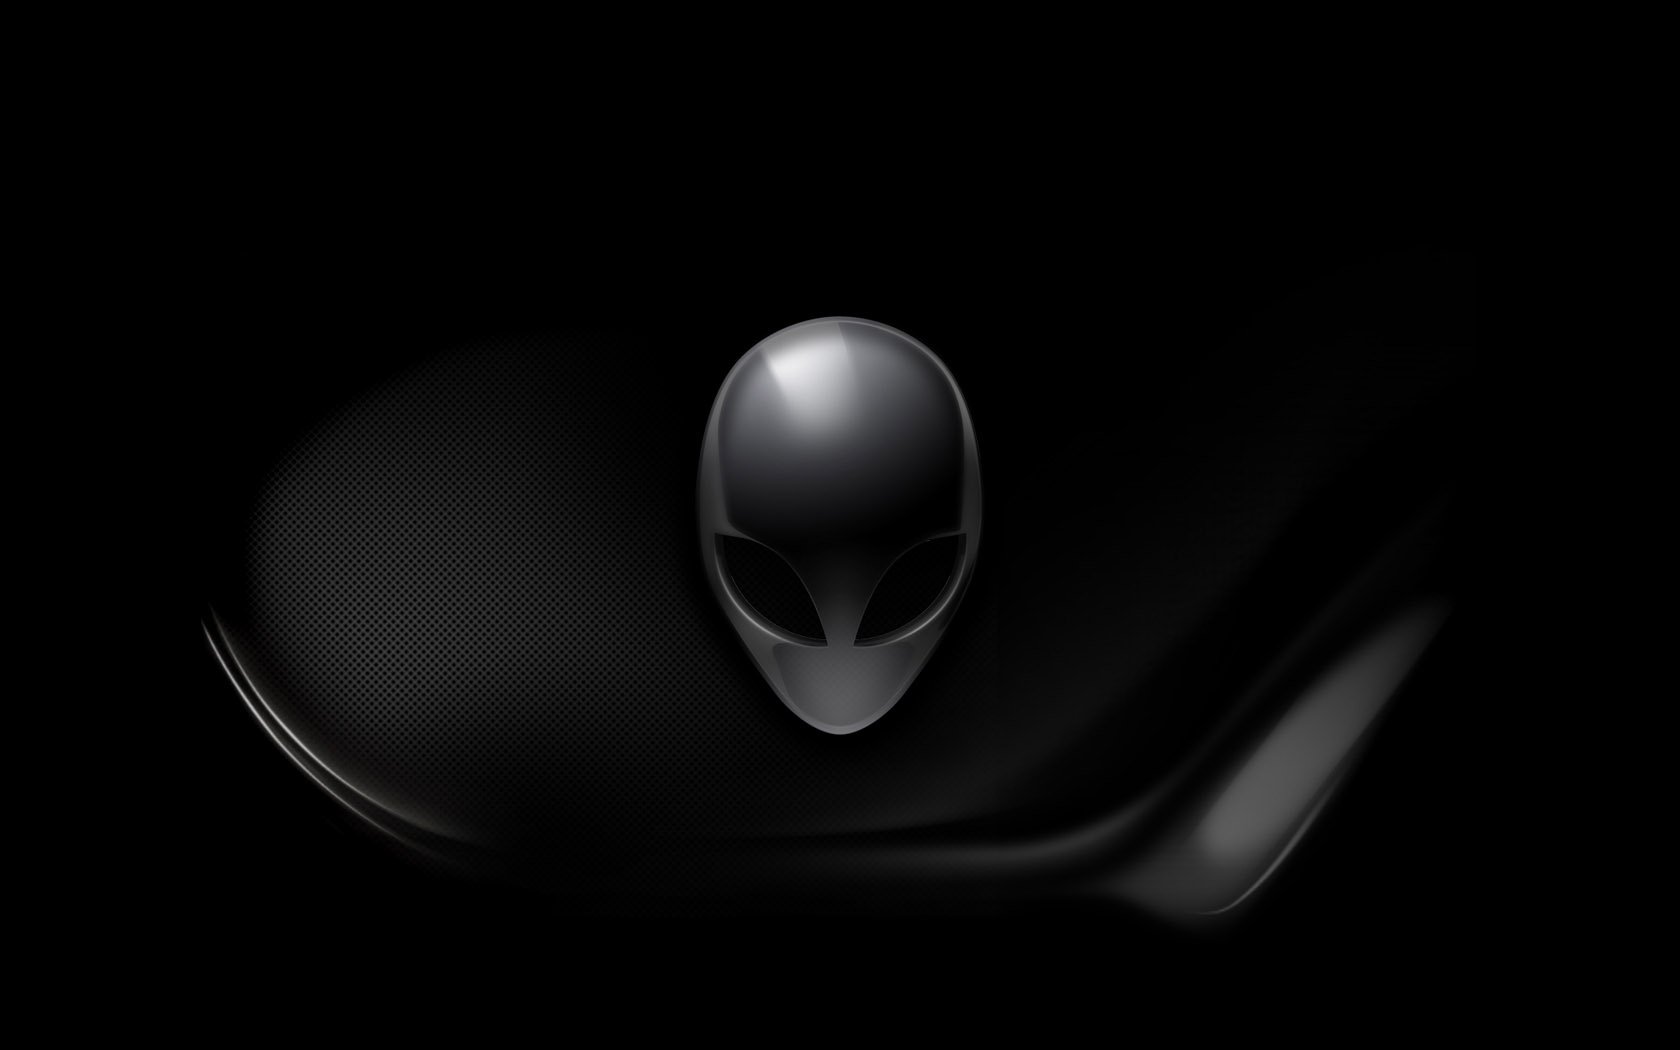 alienware logo black and white